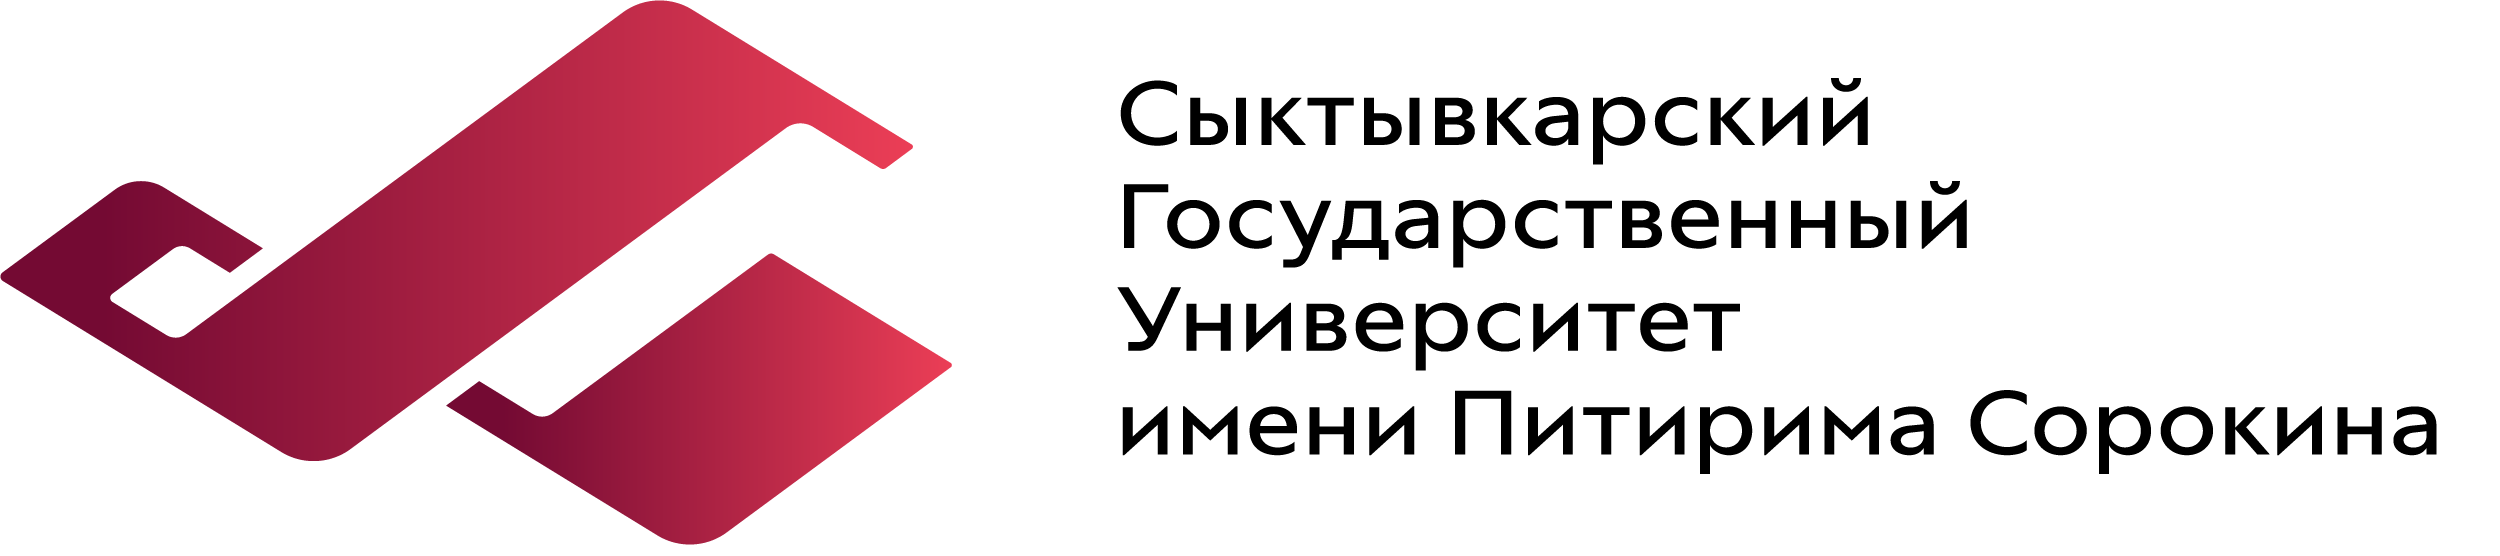 syktsu logo 2